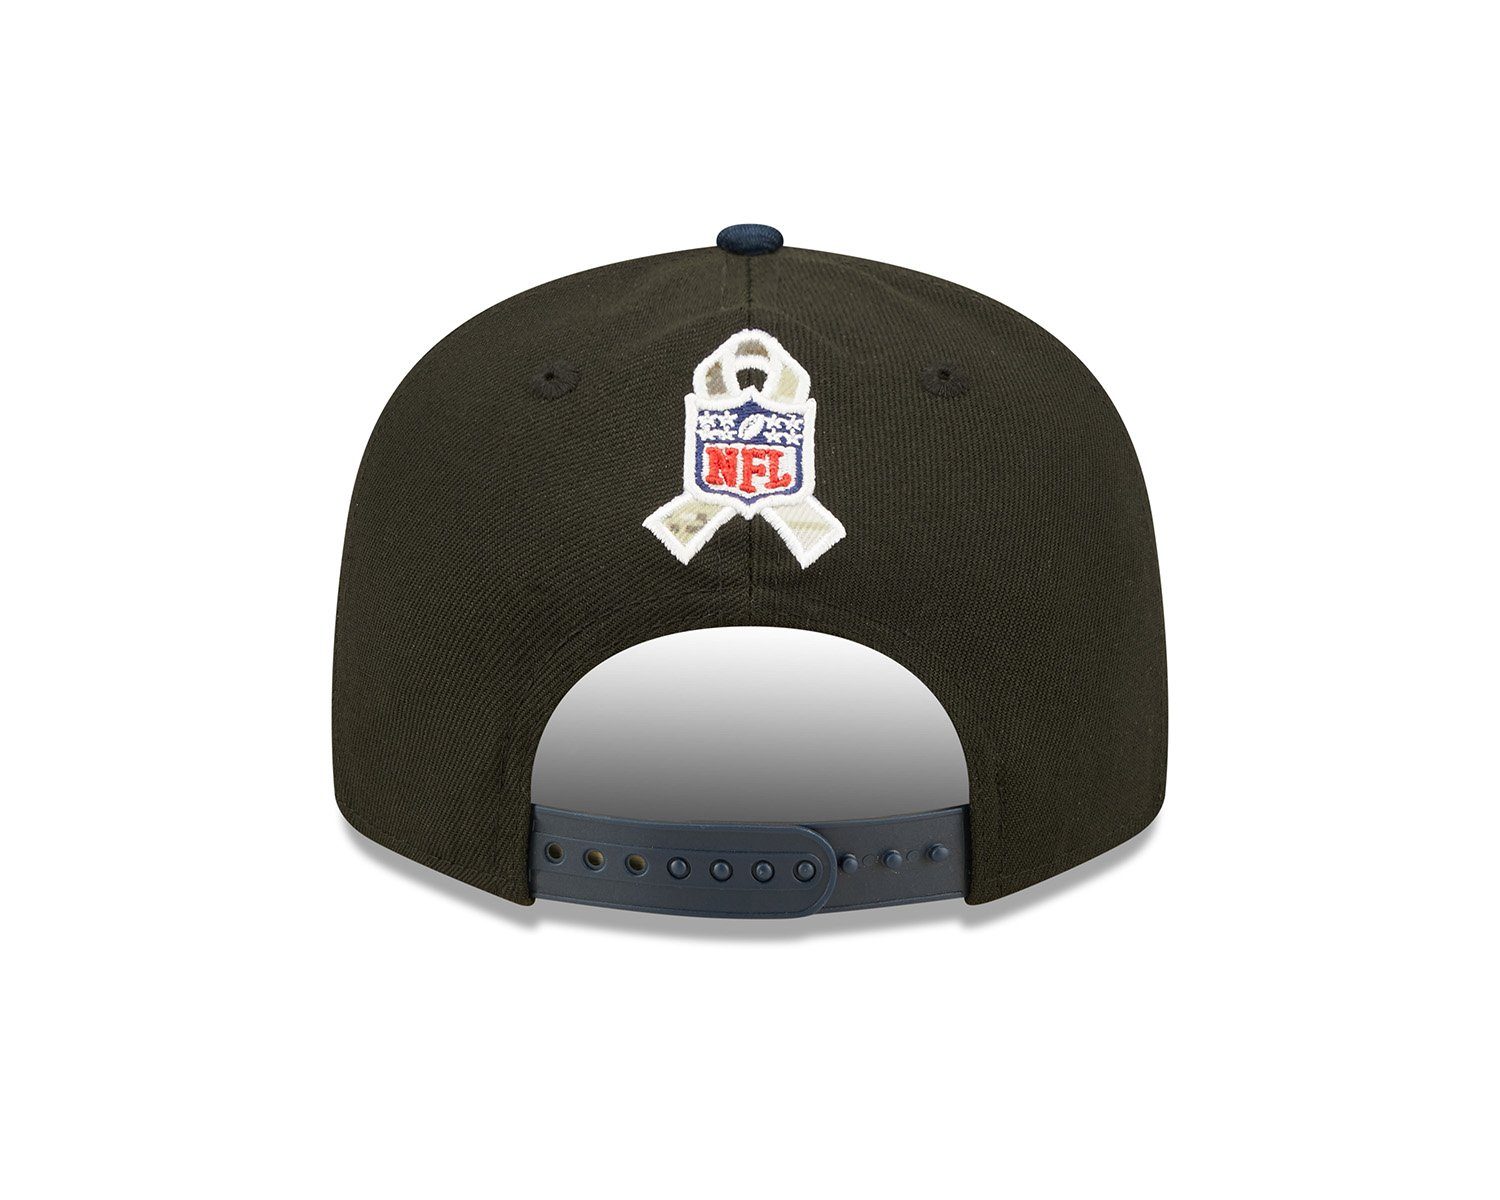 Seahawks NFL22 Snapback New Cap Service To Era Salute Seattle 9FIFTY